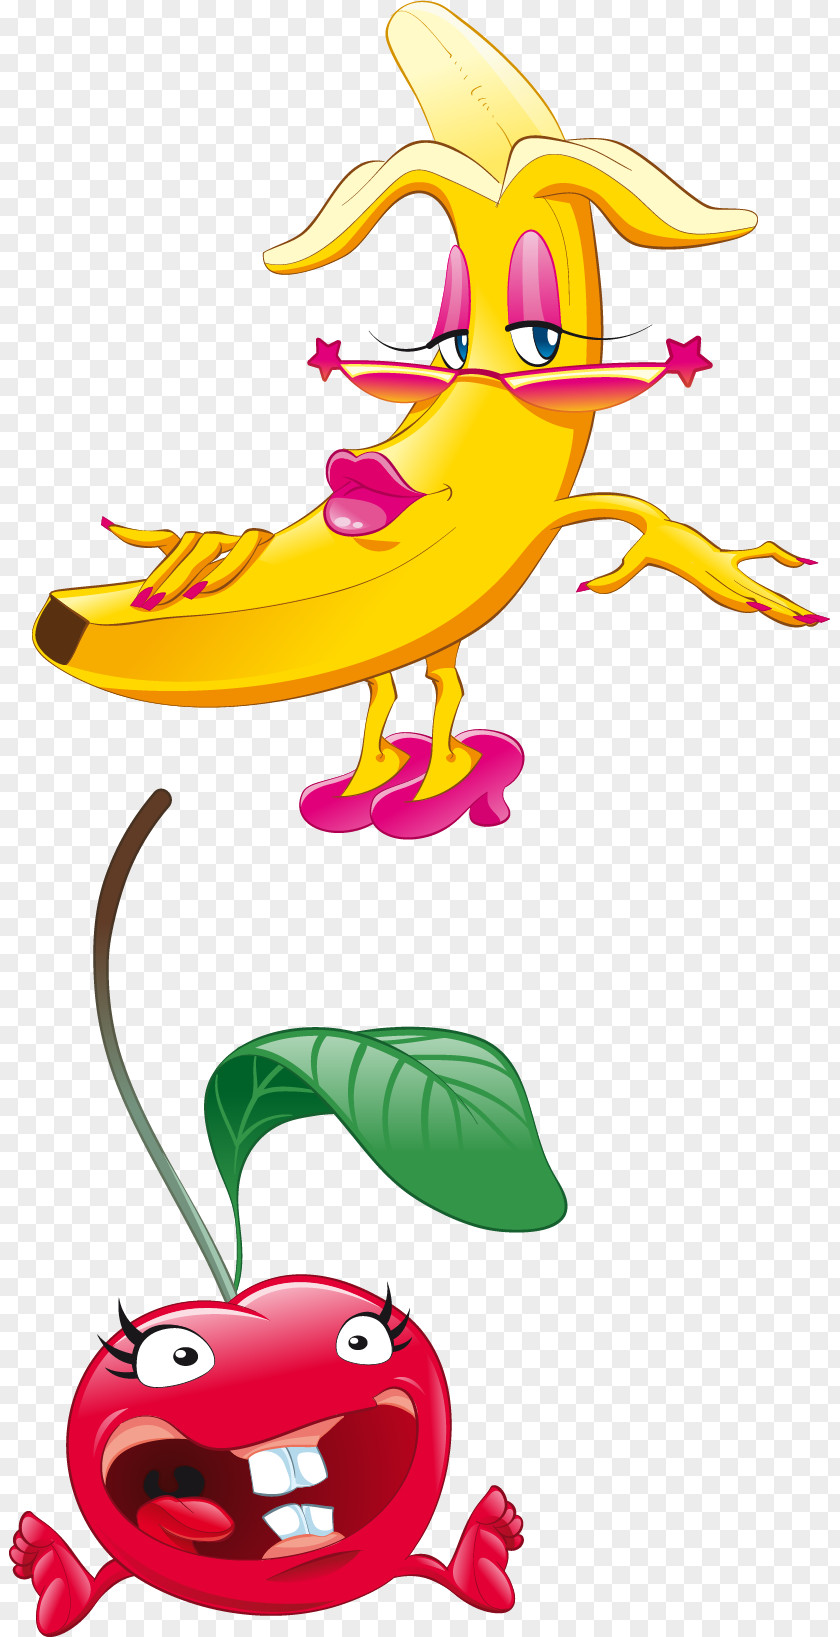 Creative Banana Cherry Vector Elements Clip Art PNG